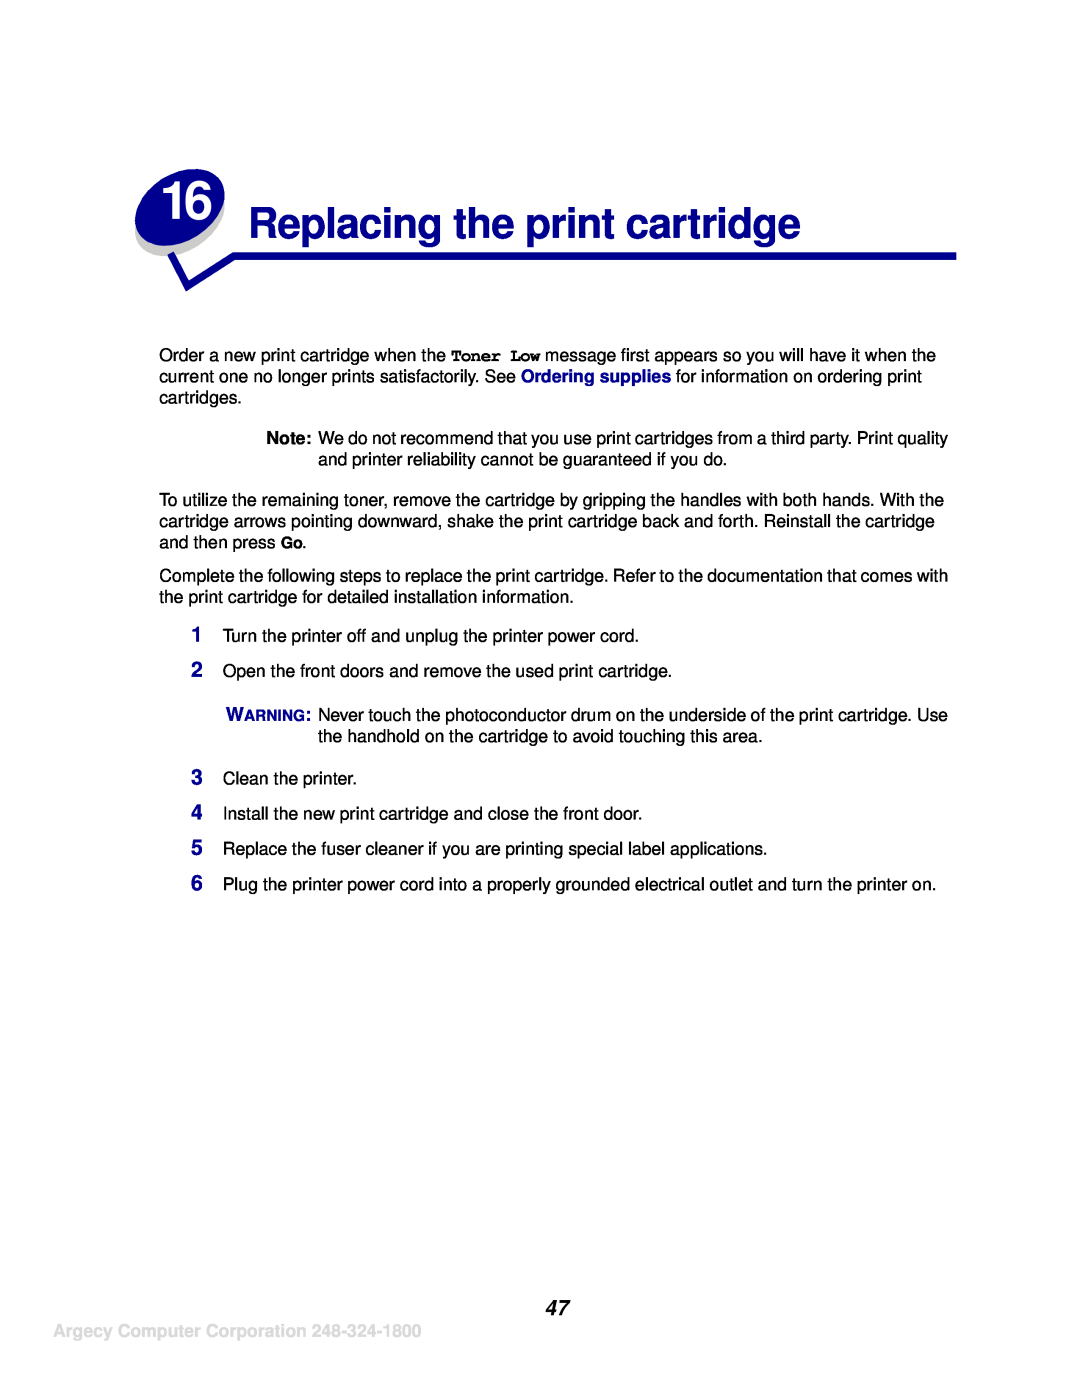 IBM 1120, 1125 manual Replacing the print cartridge, Argecy Computer Corporation 